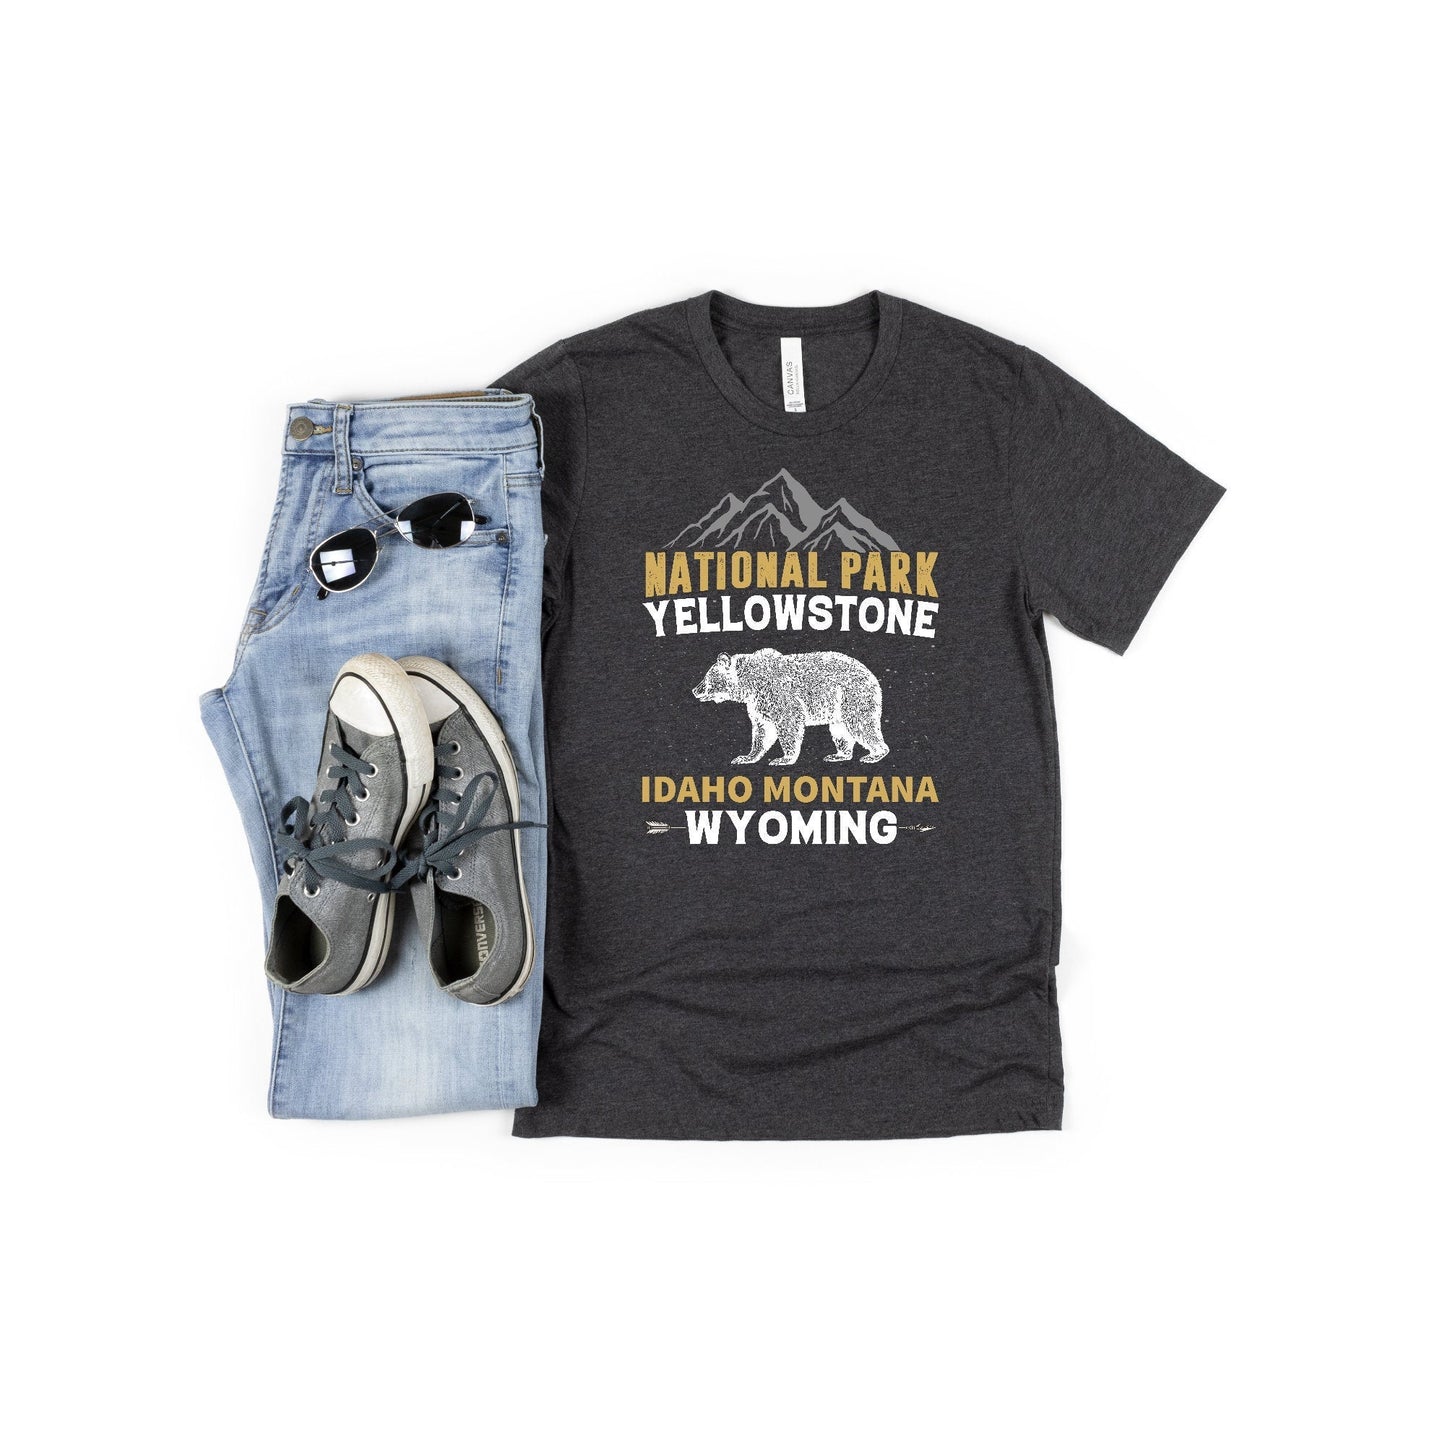 Yellowstone National Park Shirt, National Parks, Idaho Montana, Wyoming Shirt, National Park Gift, Road Trip Shirt, Yellowstone Souvenir - Premium  - Just $25.50! Shop now at Nine Thirty Nine Design